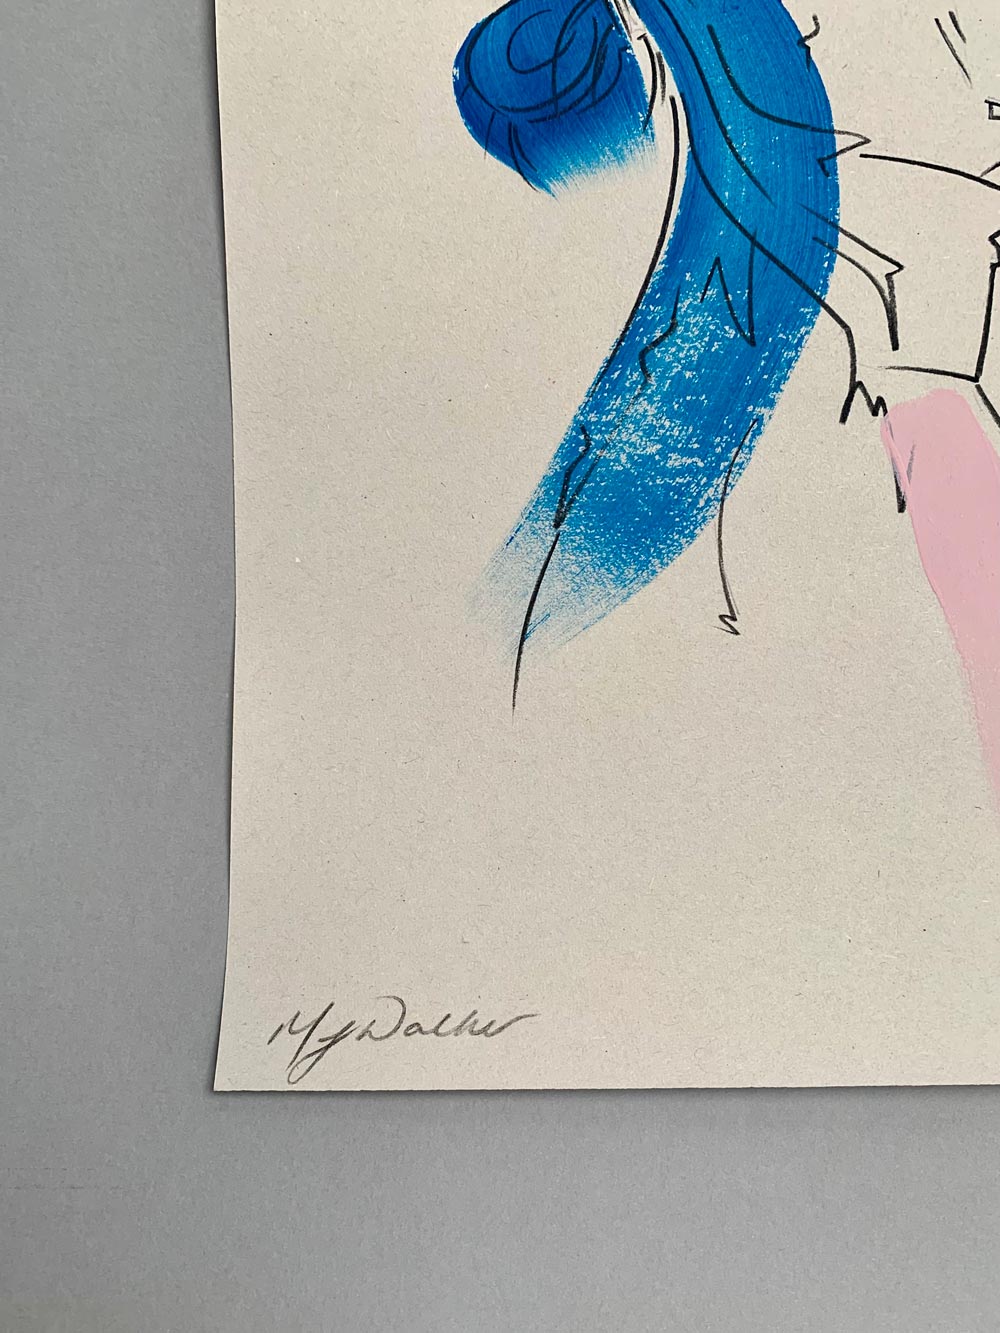 Melanie Walker's signature on a fashion illustration of a fashion model.